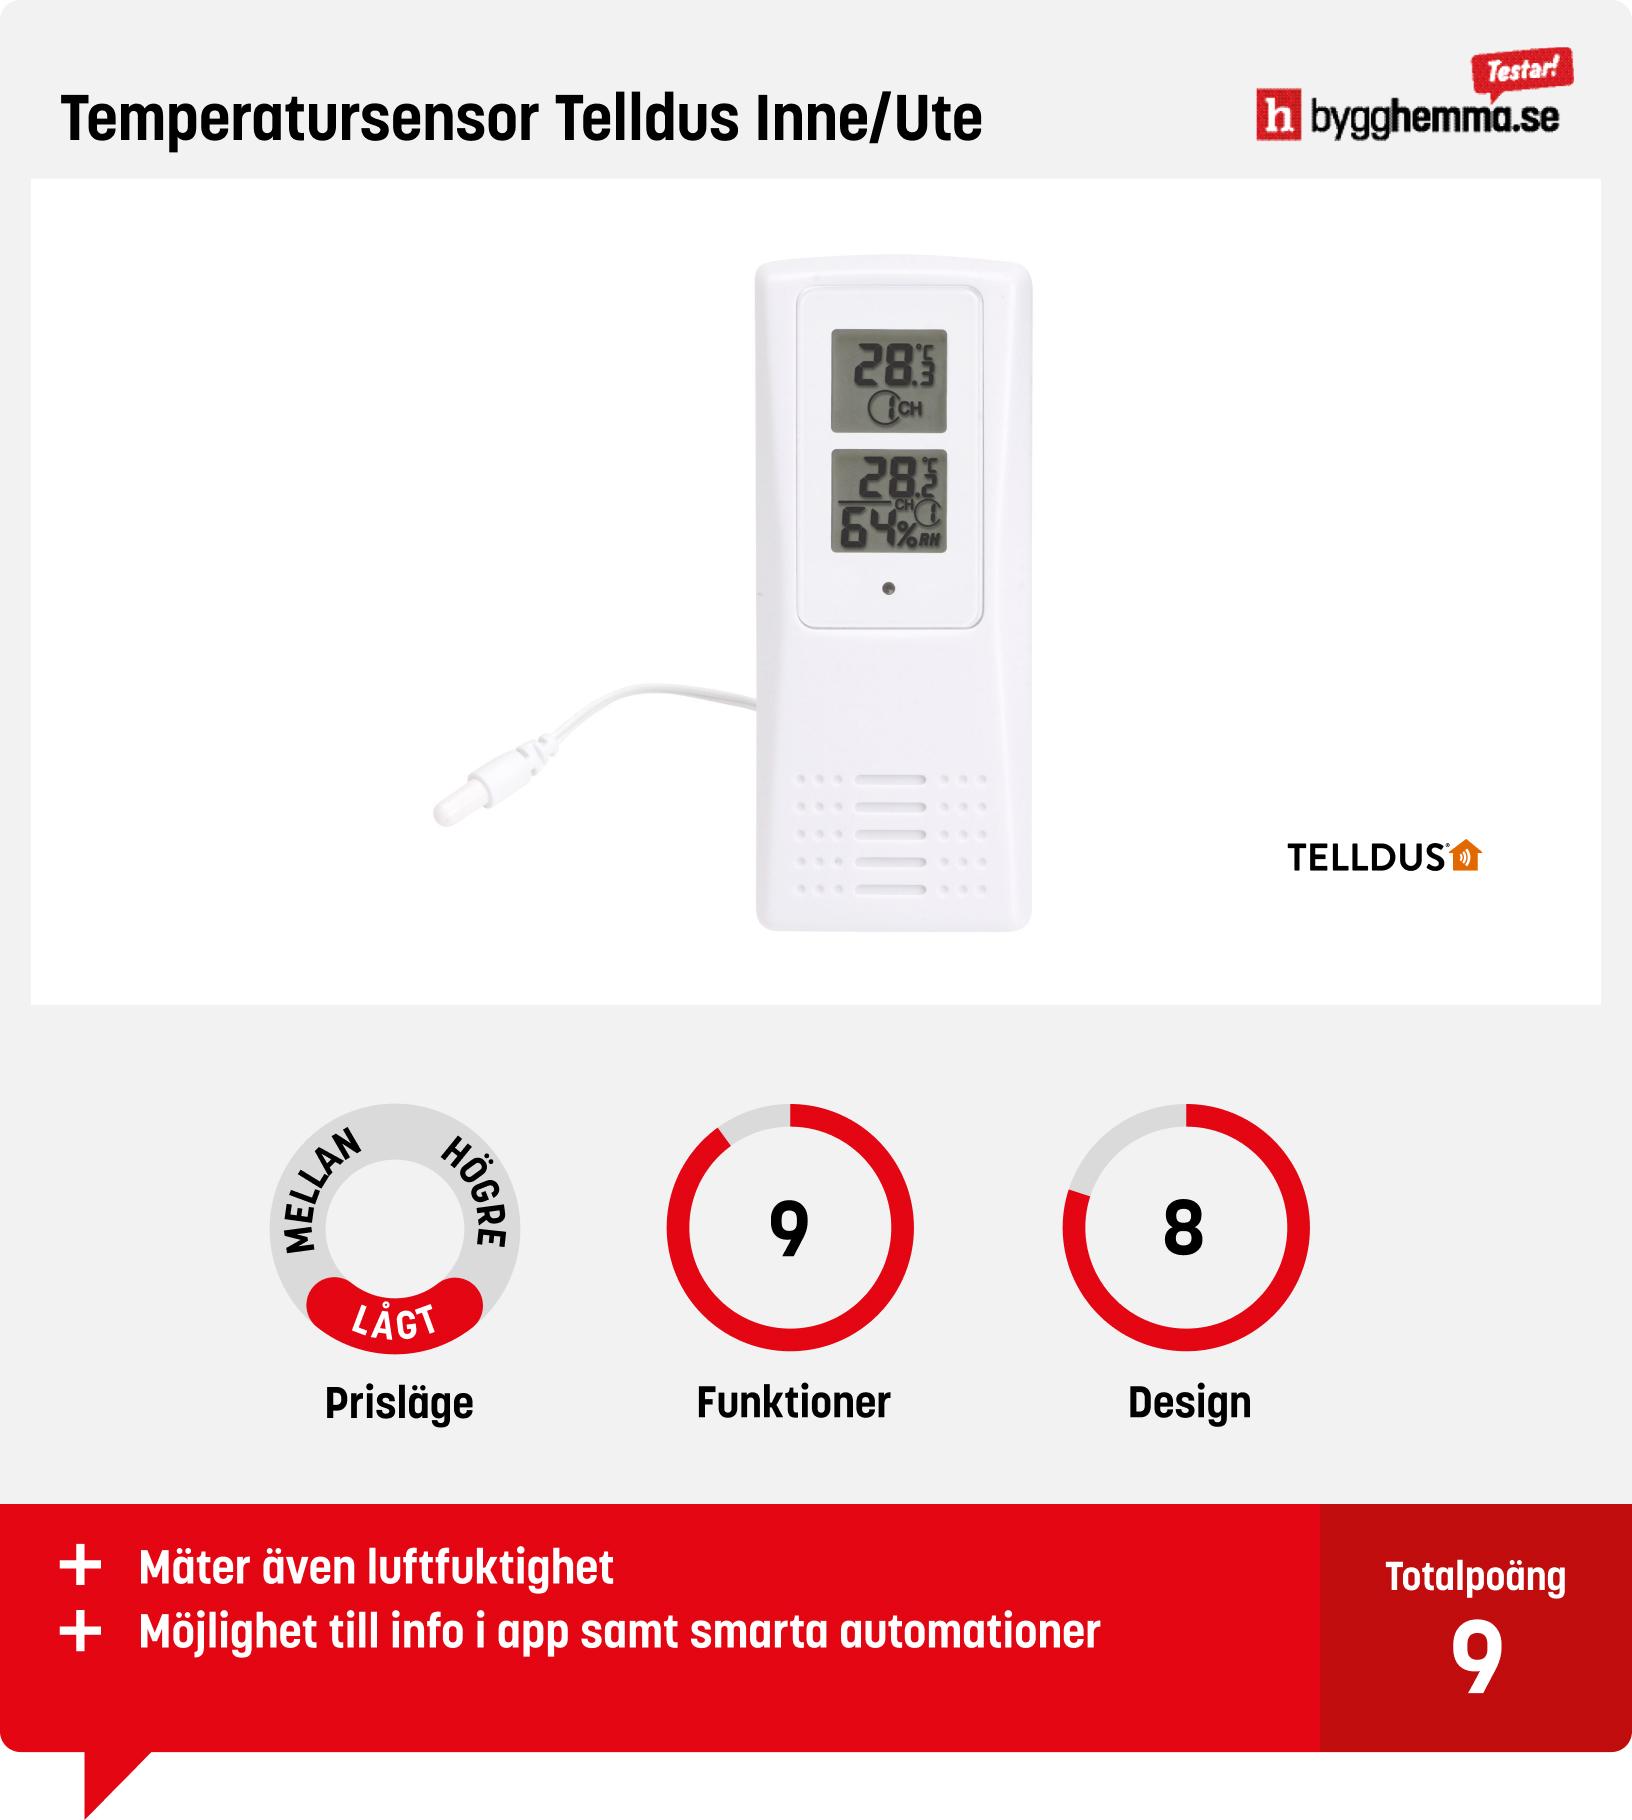 Ute inne termometer bäst i test - Temperatursensor Telldus Inne/Ute